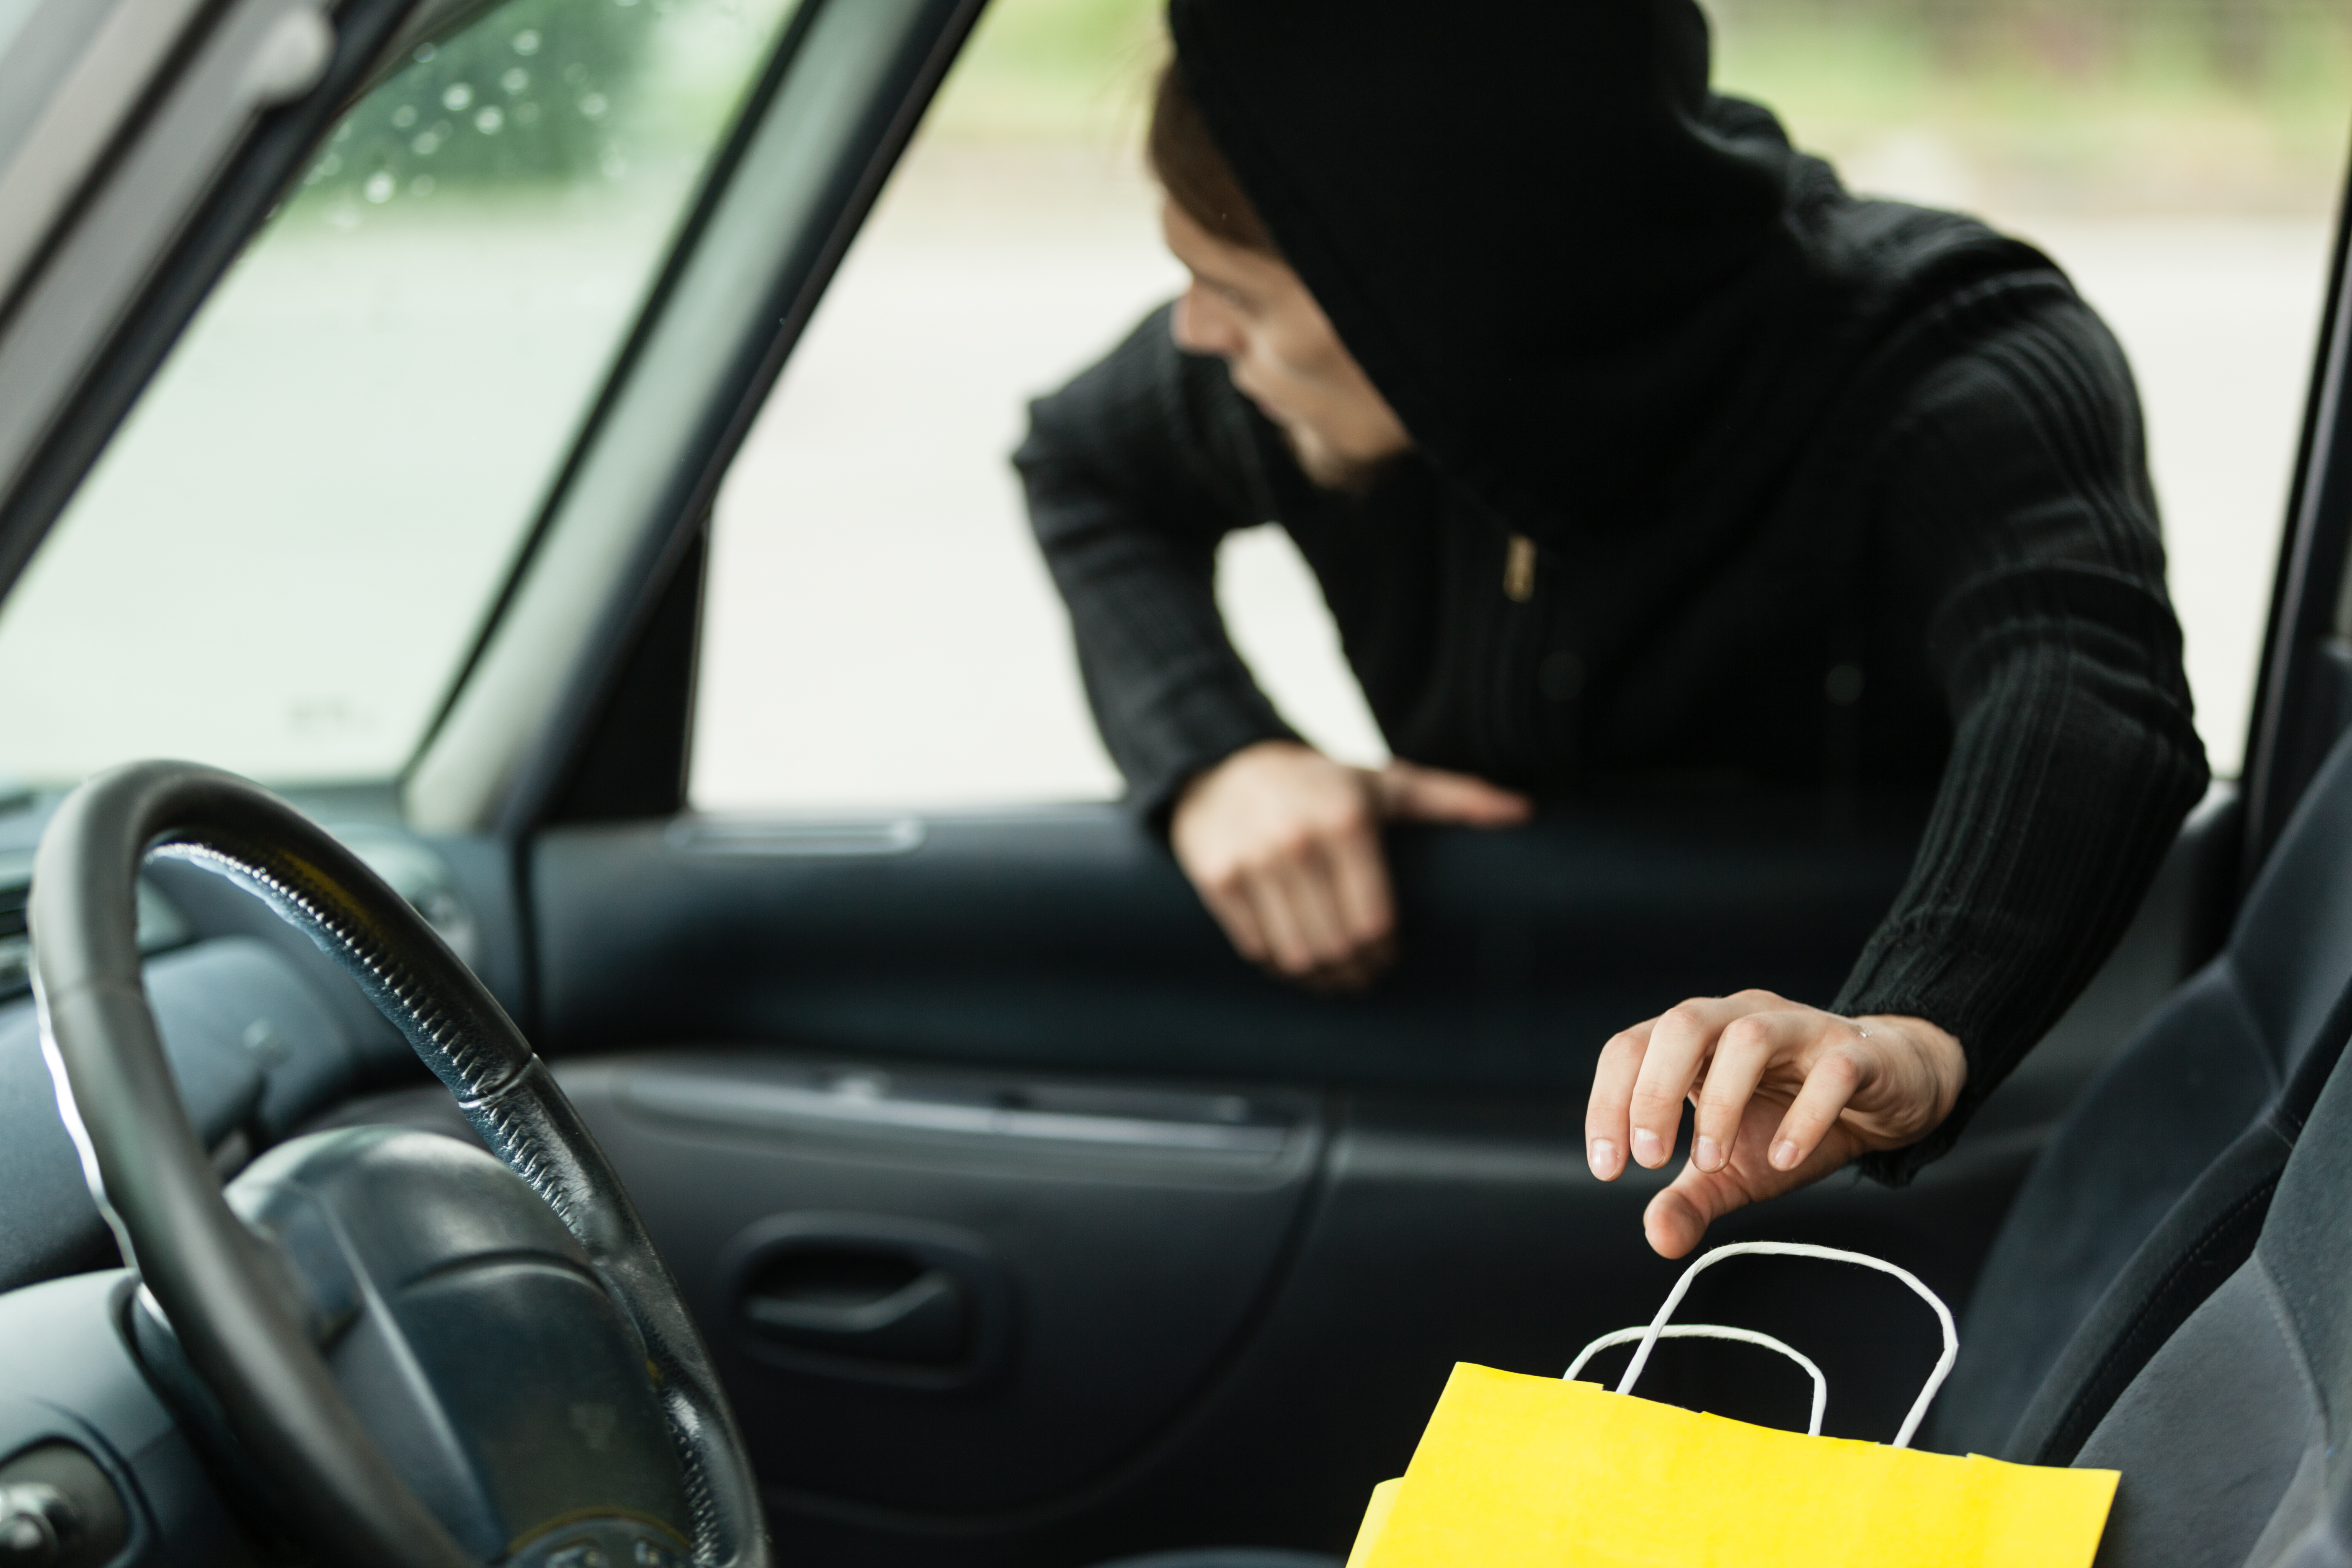 Man stealing a shopping bag - shoplifting crimes